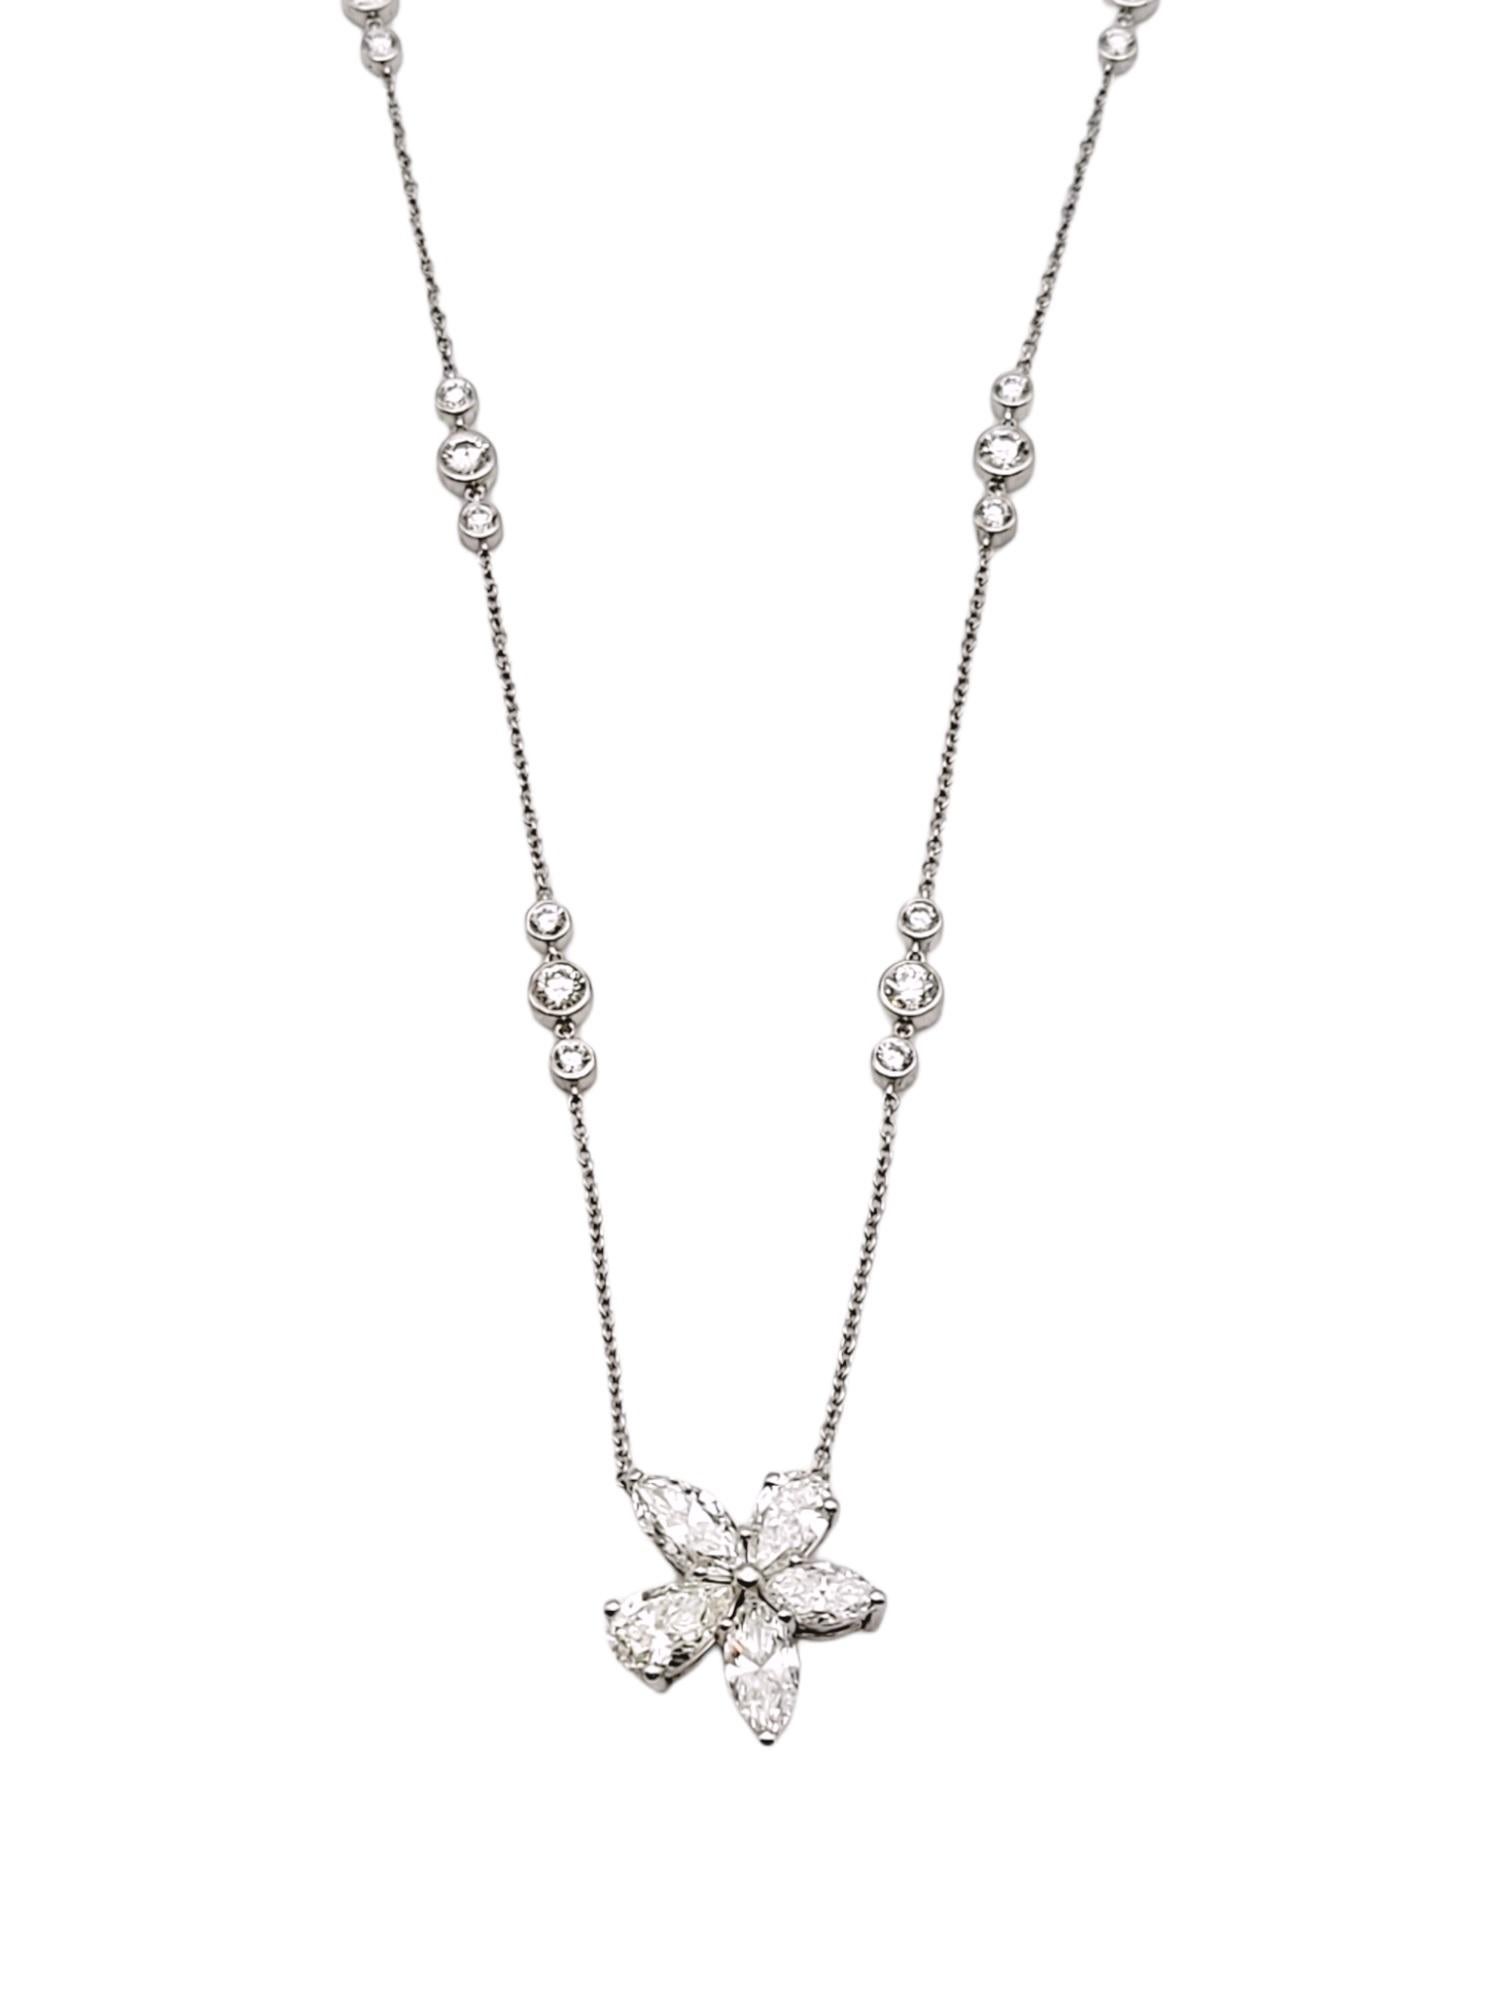 Tiffany & Co. Victoria Diamond Pendant Necklace in Platinum Extra Large, Station 2